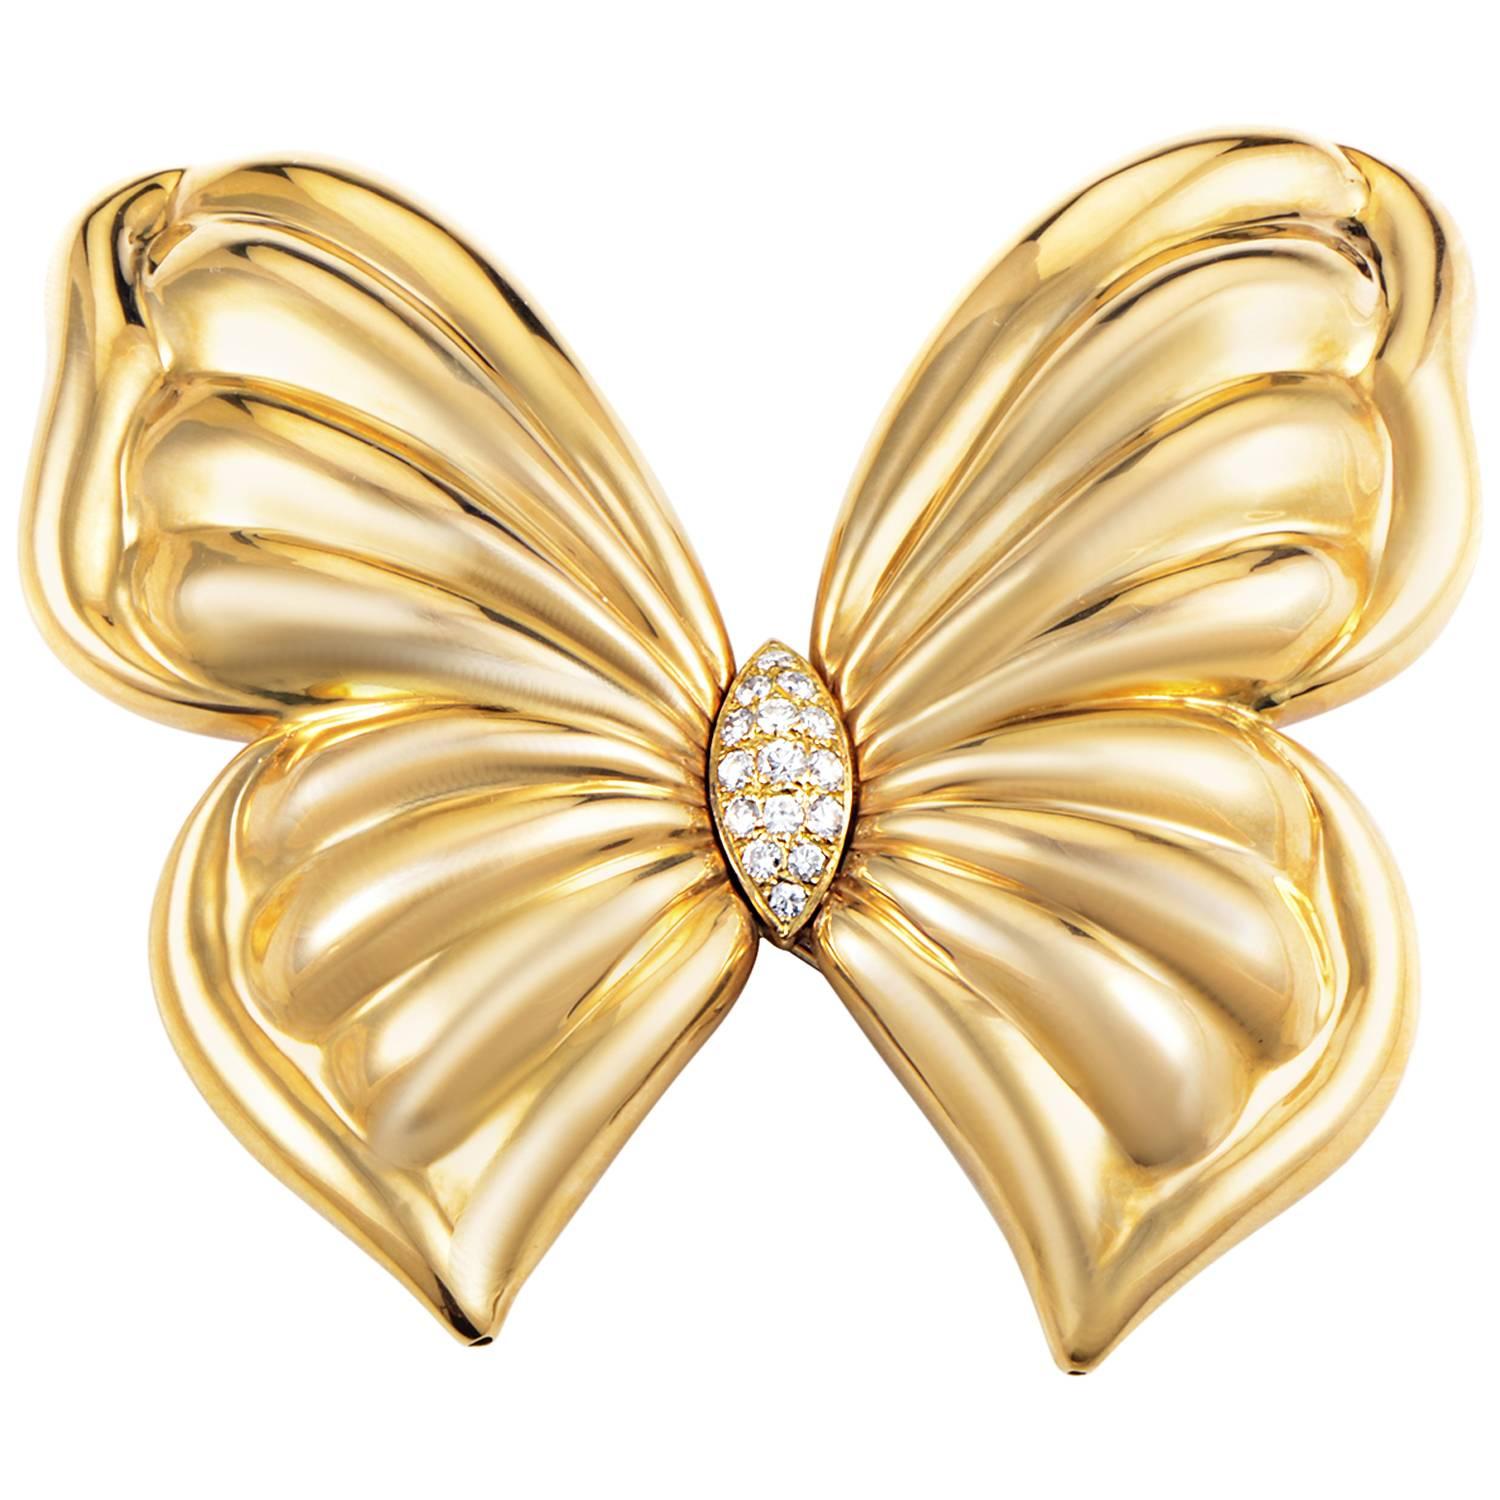 Van Cleef & Arpels Diamond Gold Butterfly Brooch